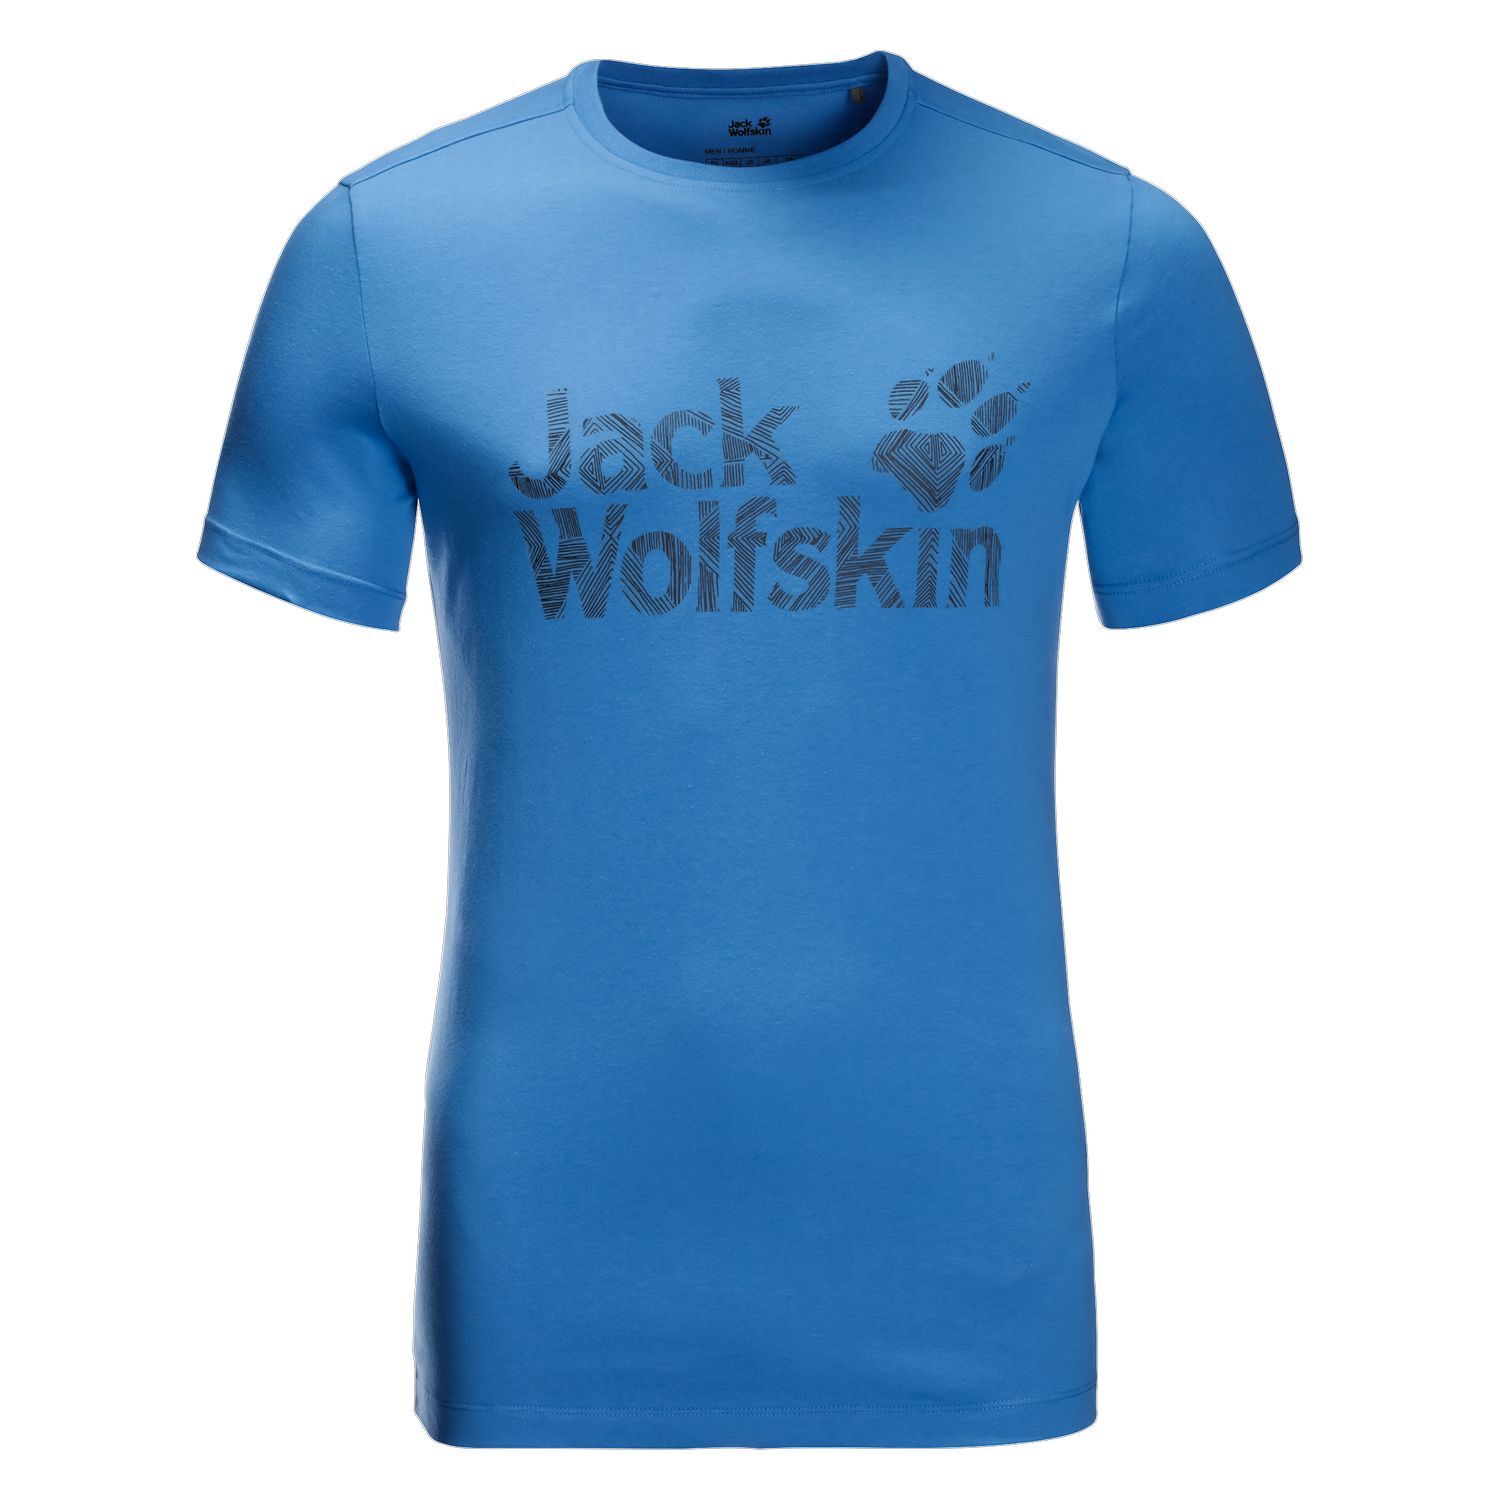 Jack Wolfskin Brand Logo T-Shirt - Mens (Wave Blue)